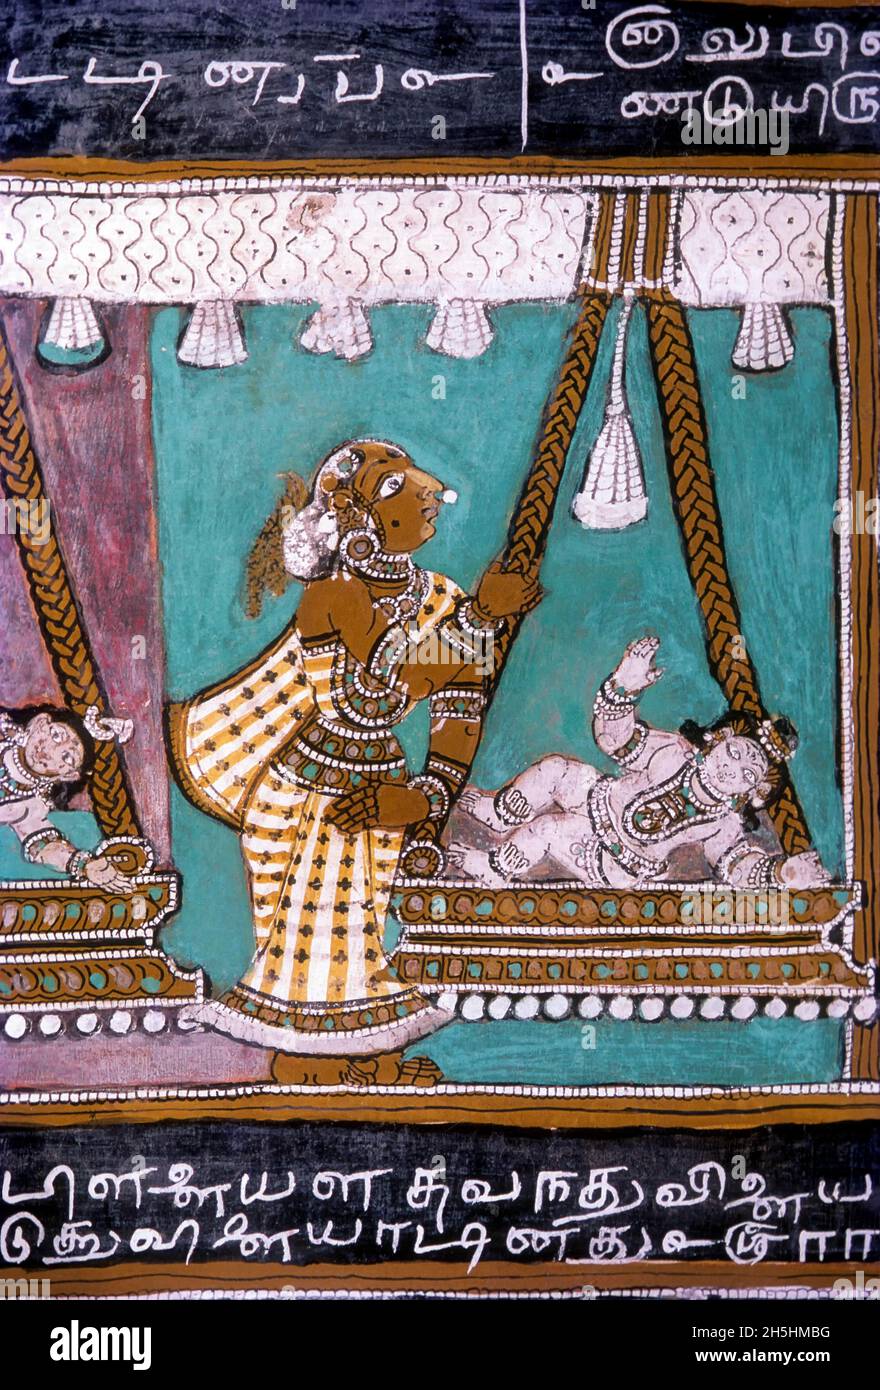 400 years old Ramayana; old baby Rama in cradle; painting at Alagar koyil near Madurai, Tamil Nadu, India Stock Photo